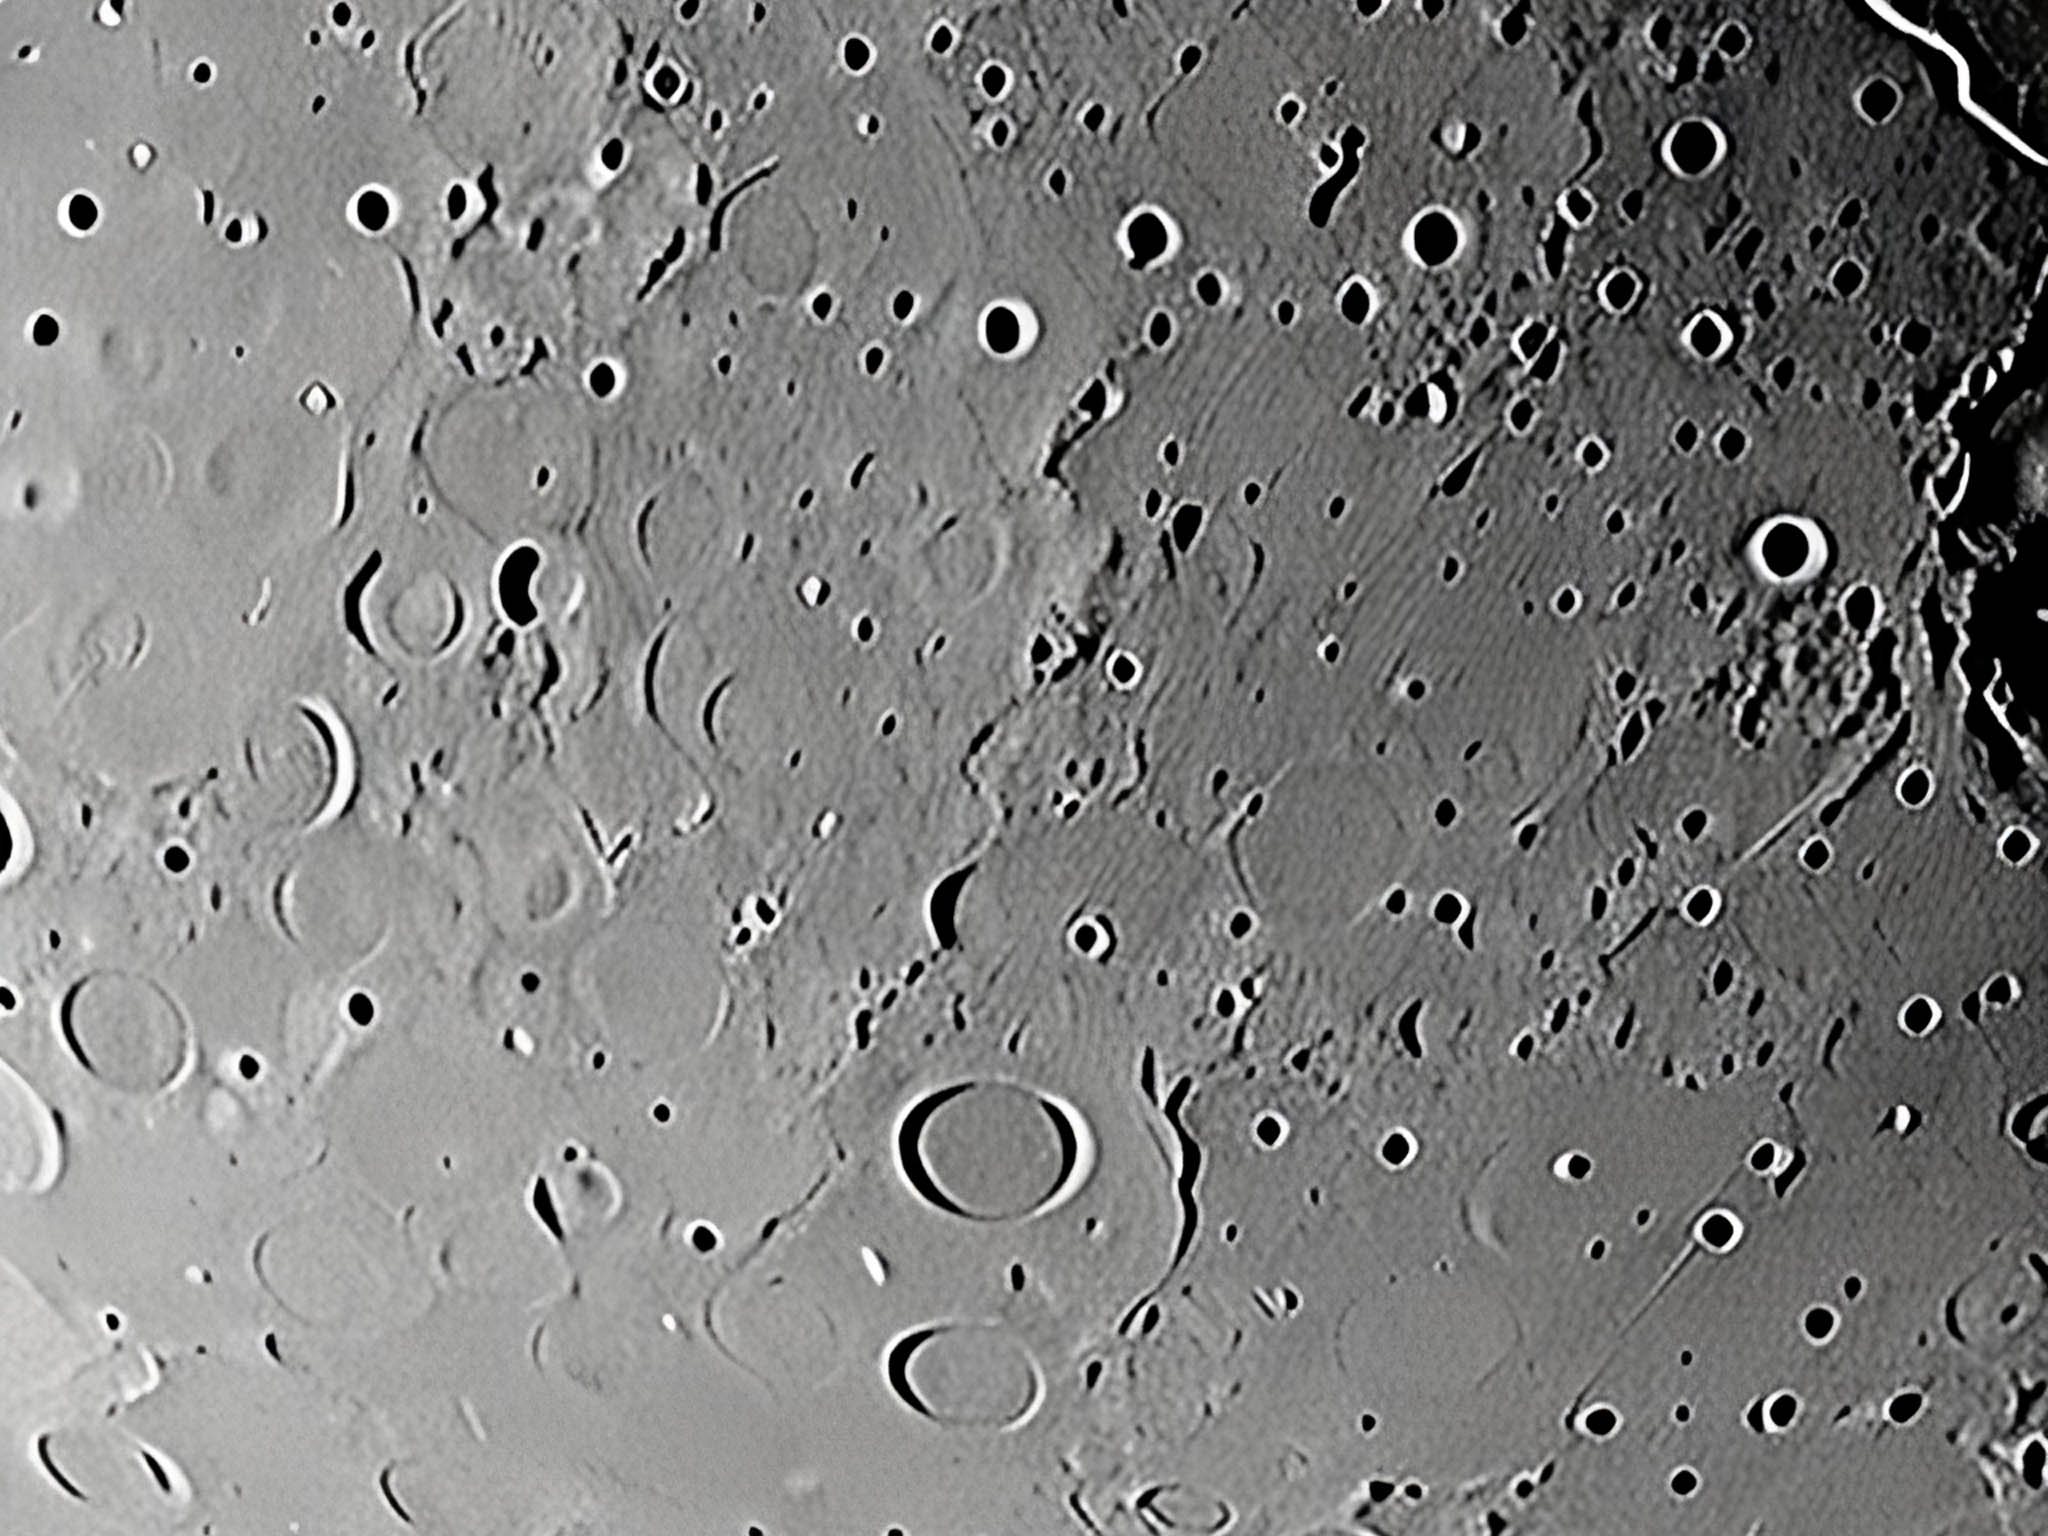 Mercury – the innermost planet